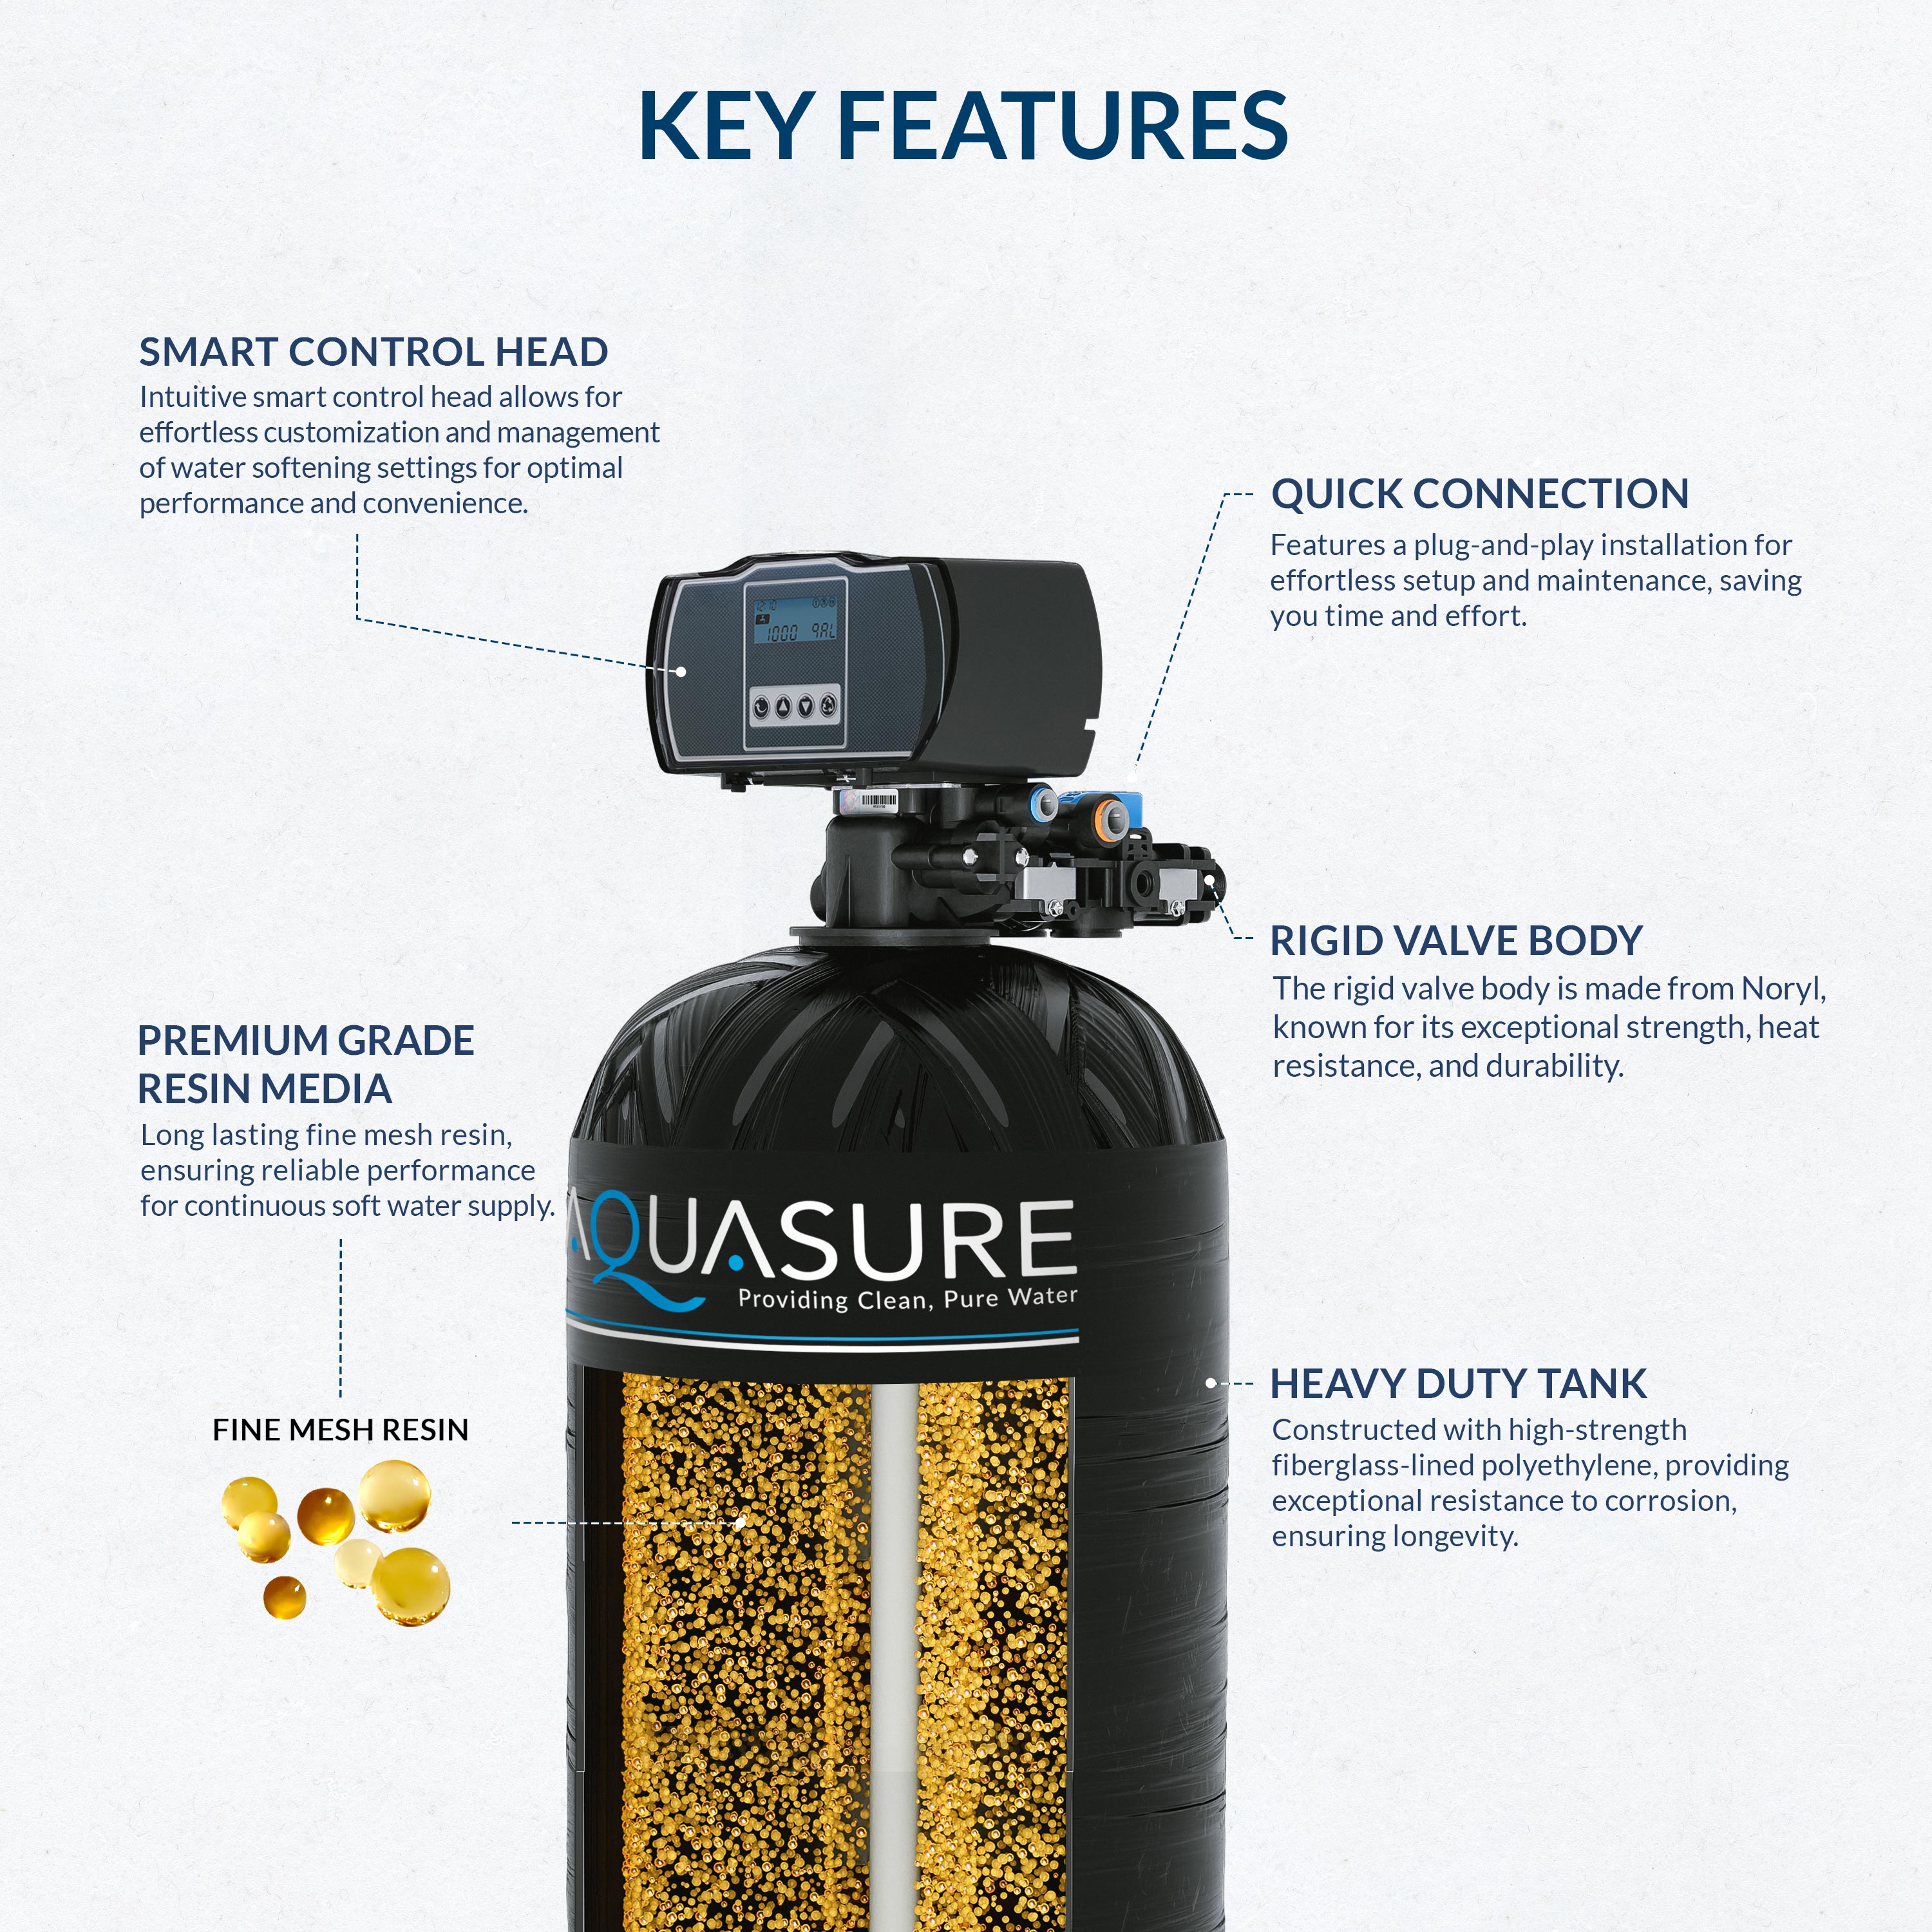 Aquasure Harmony Series 64,000 Grains Water Softener plus Iron Removal w/Aquatrol Digital Head and Premium Grade Fine Mesh Resin